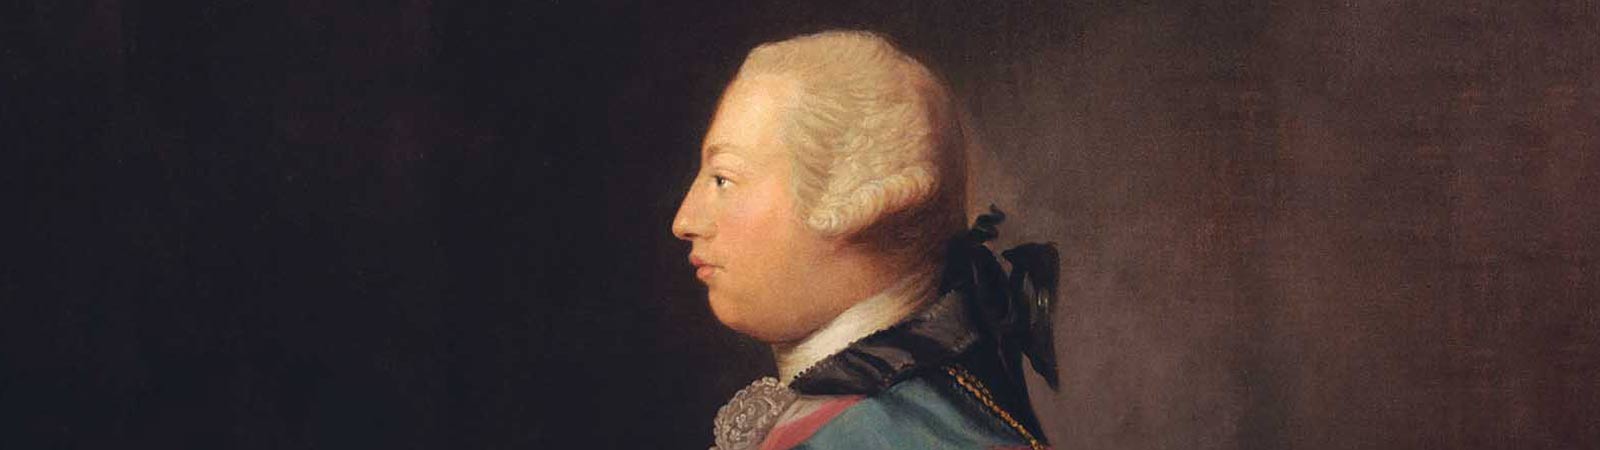 The Year of King George III